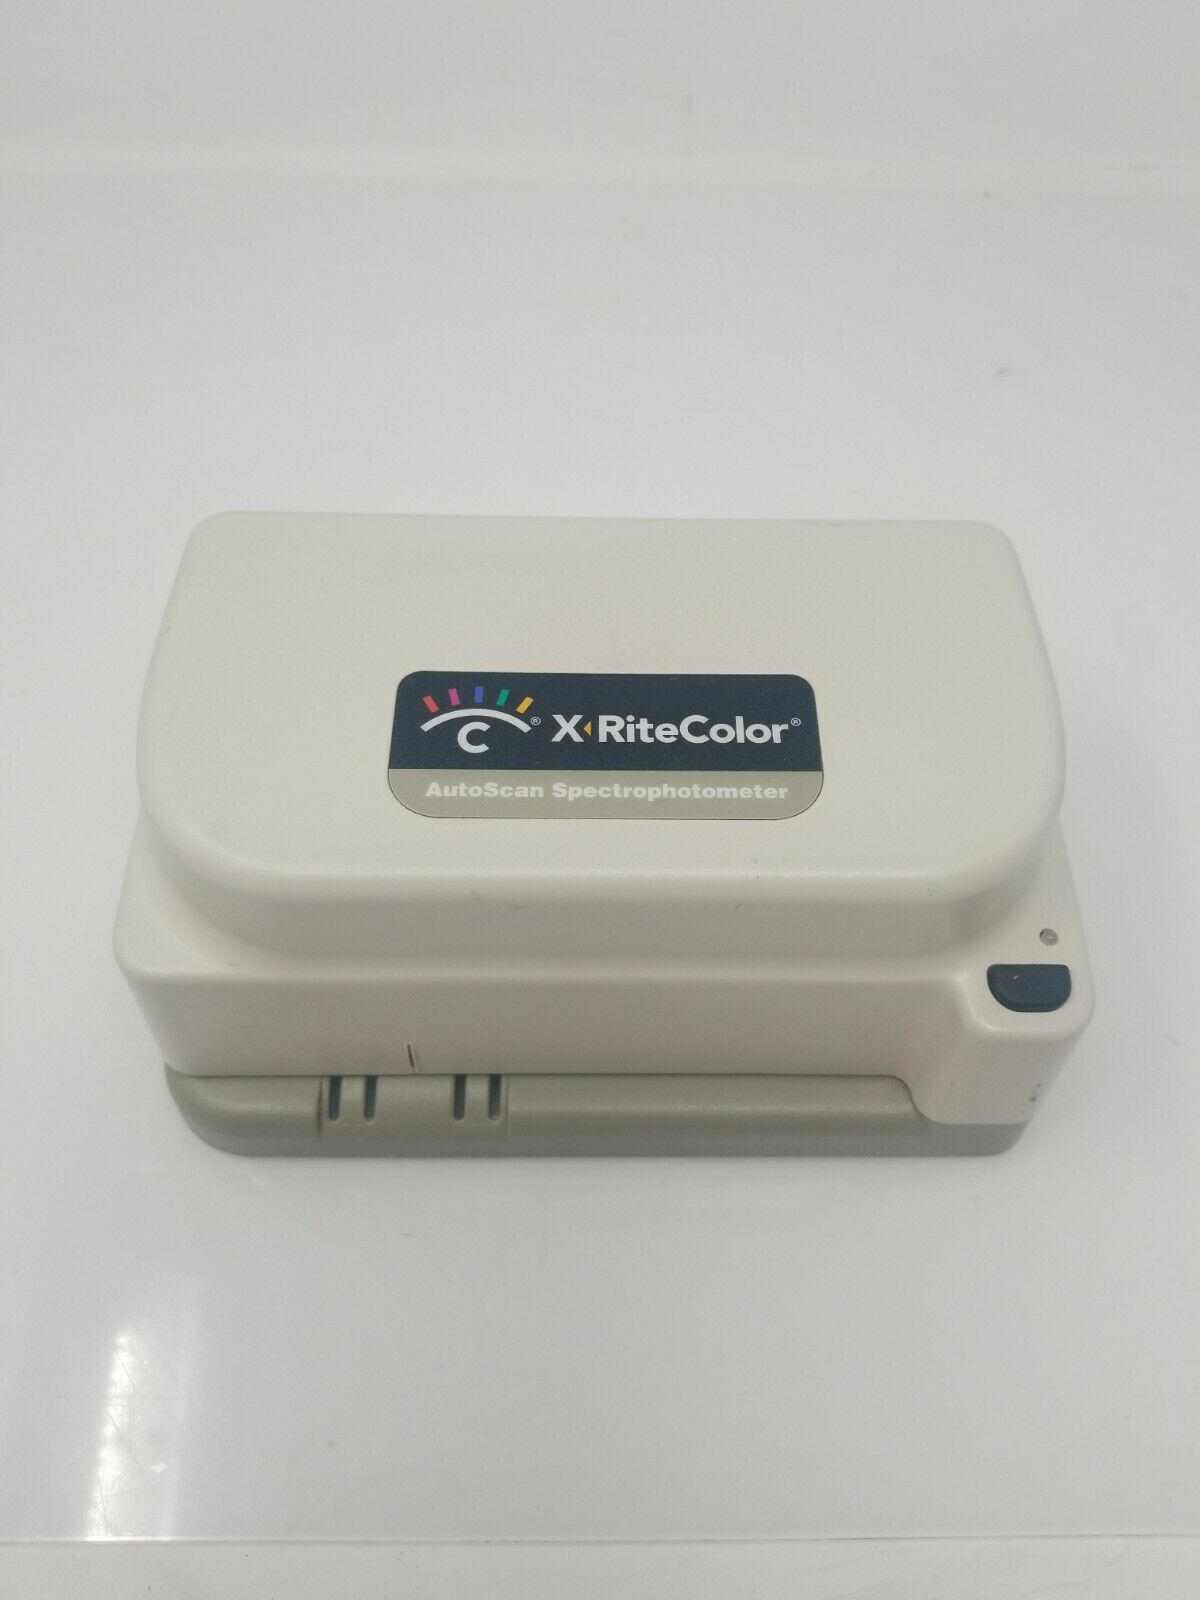 X-Rite DTP41 Color Autoscan Spectrophotometer Spectrophotometers-0